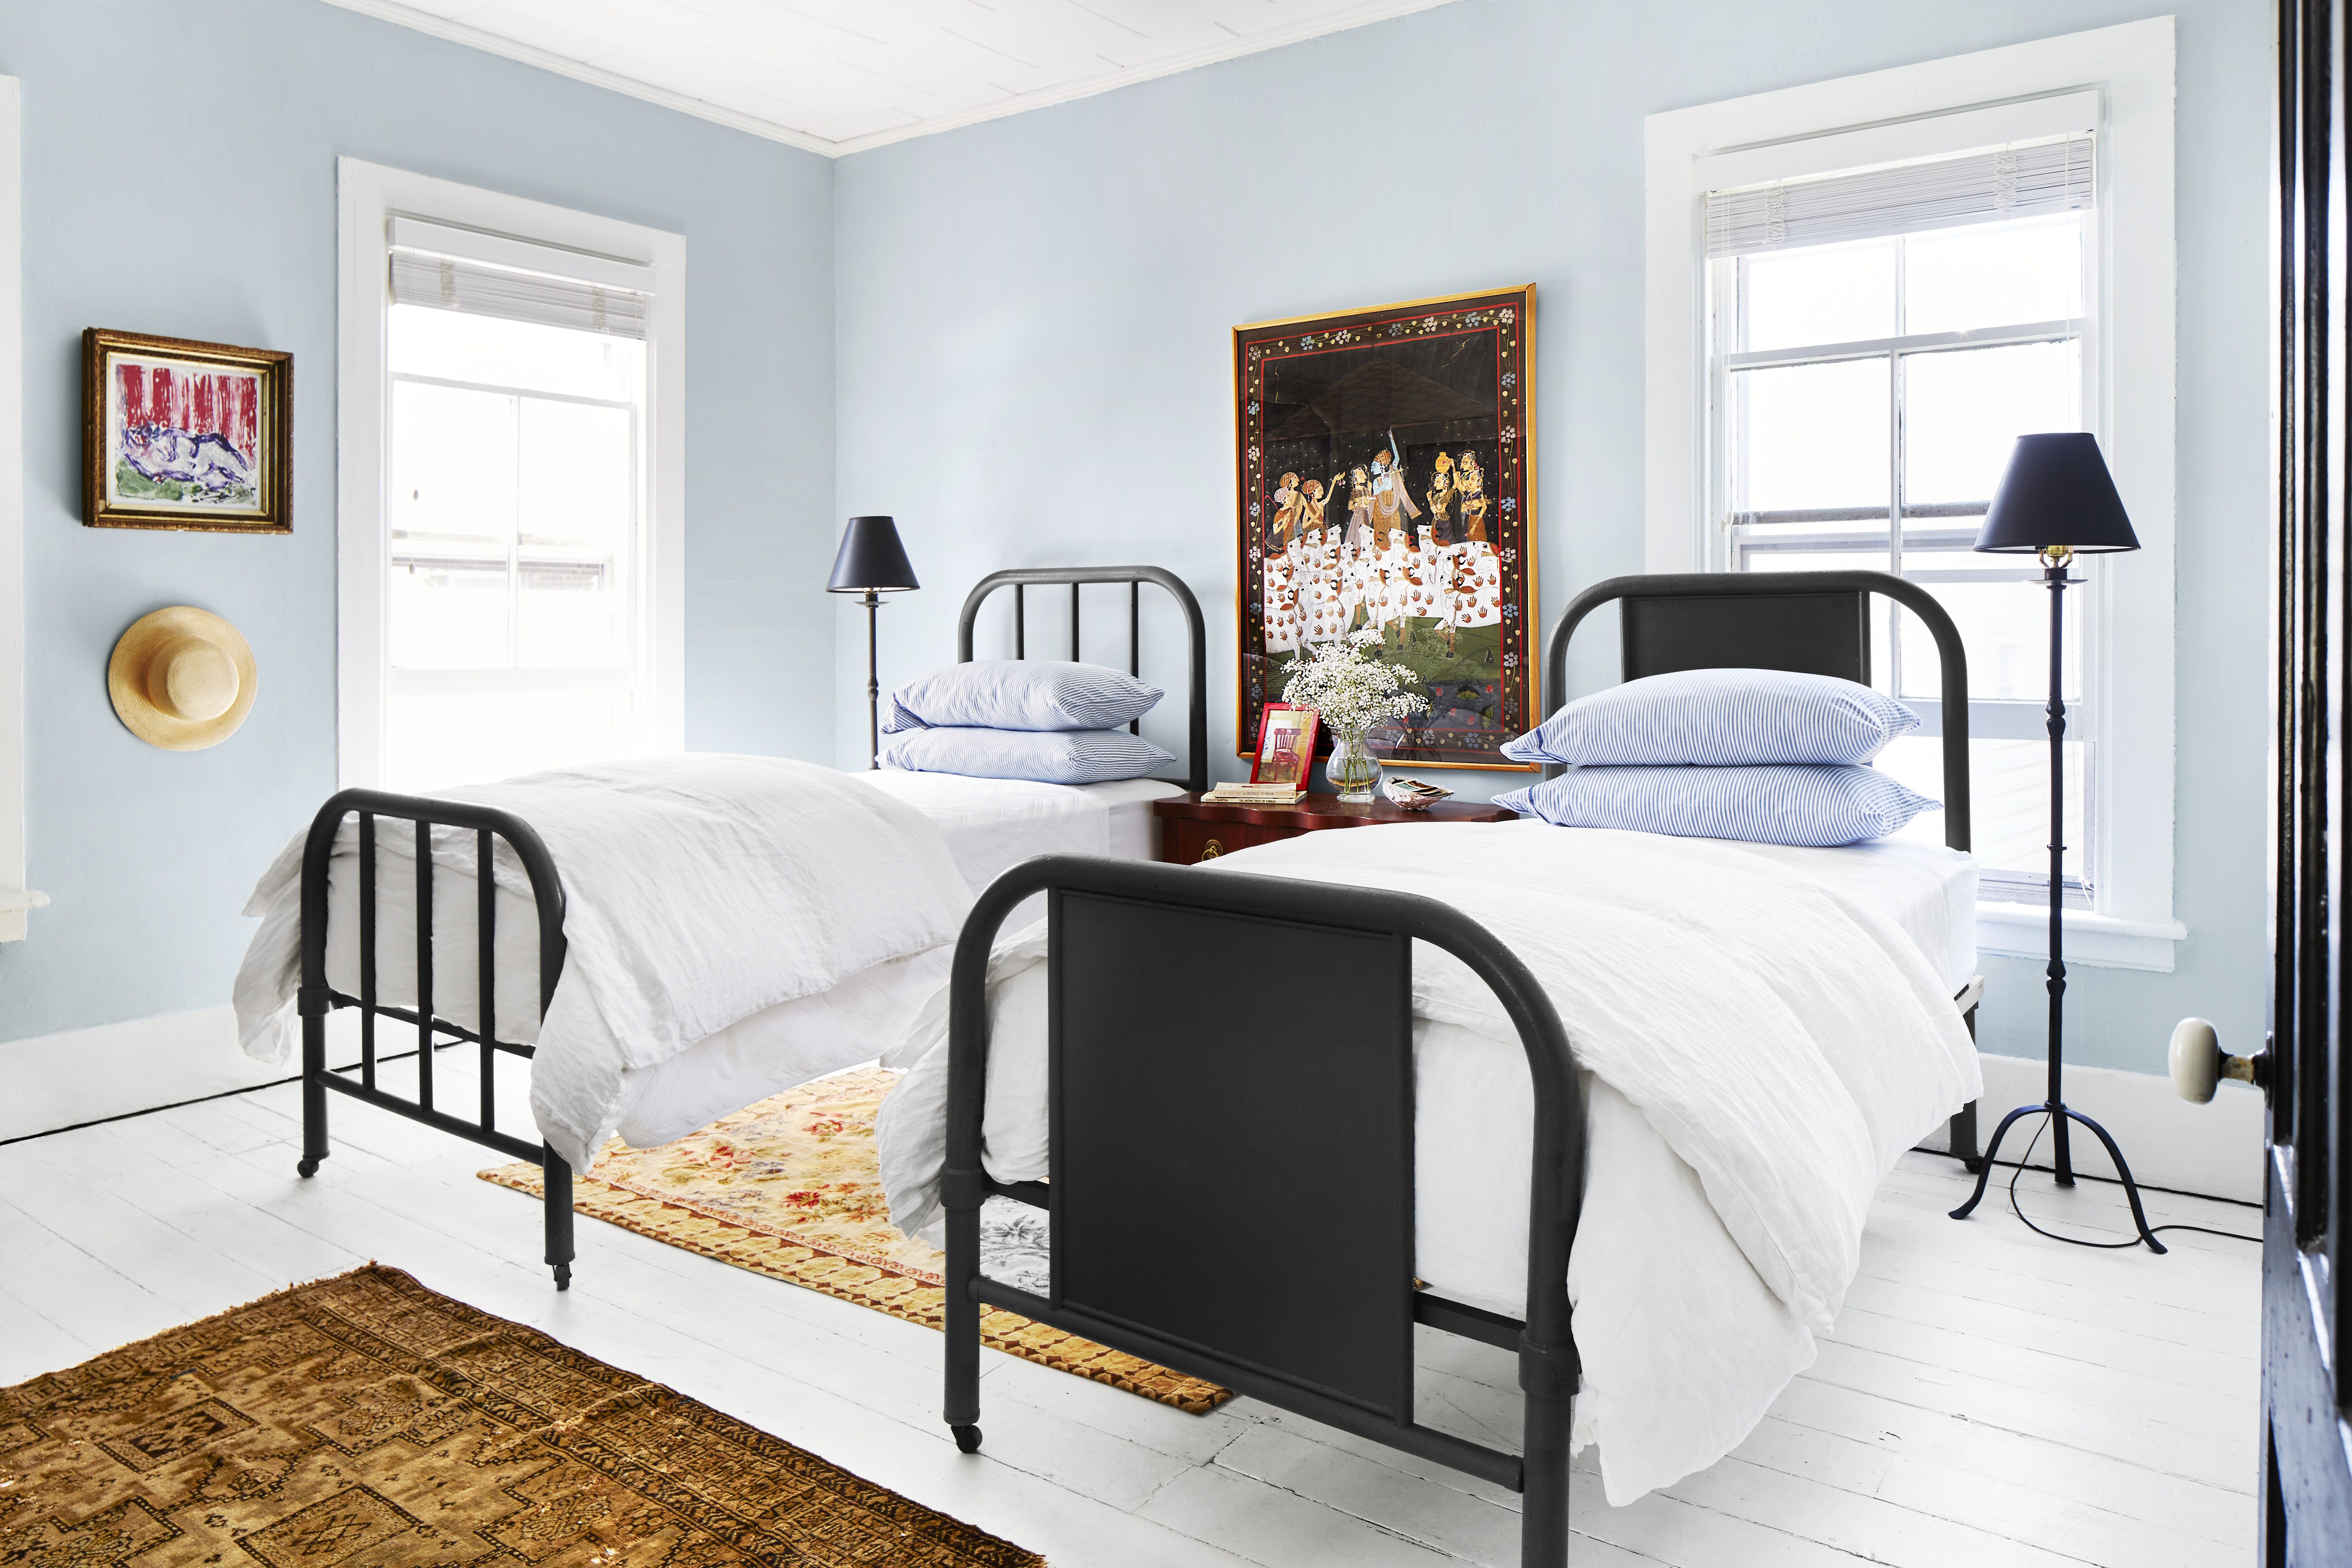 Blue Paint Designs For Bedroom - Best Color Bedroom Walls Blue Paint